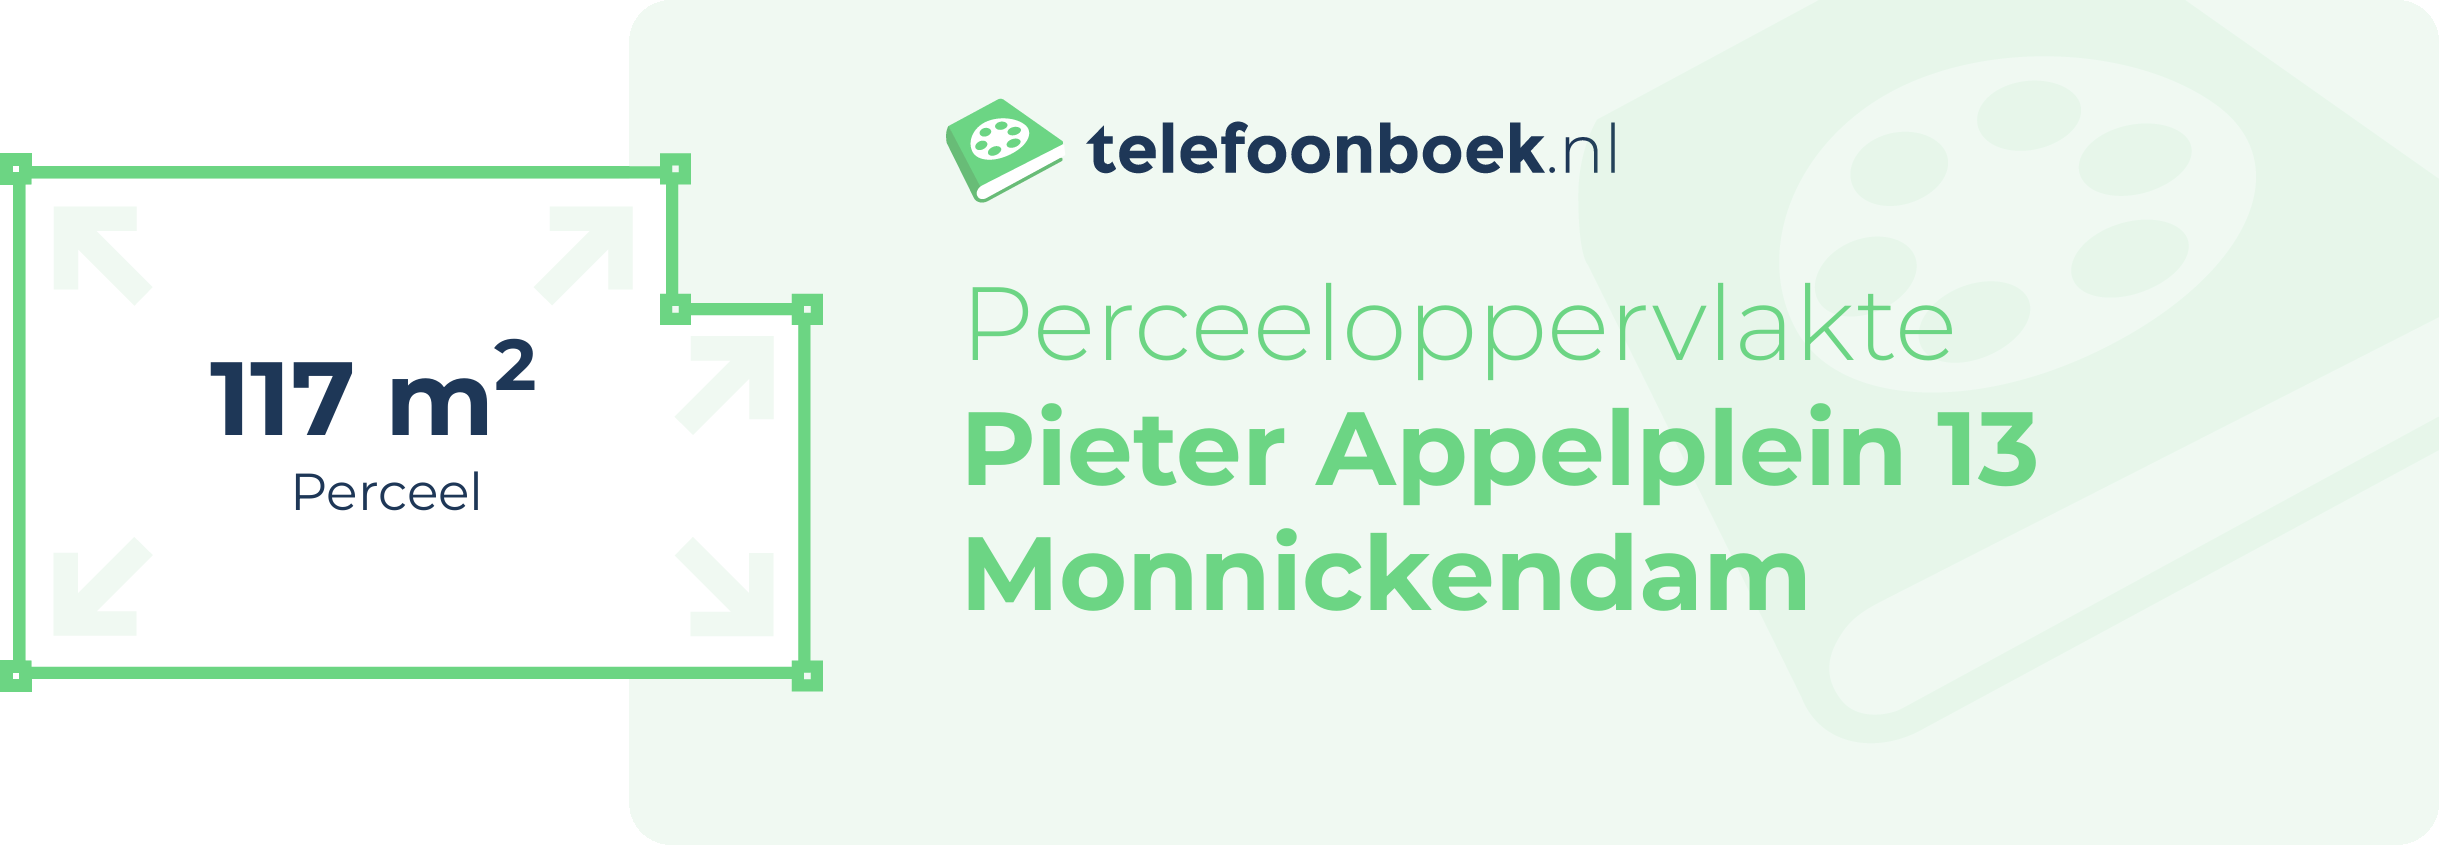 Perceeloppervlakte Pieter Appelplein 13 Monnickendam